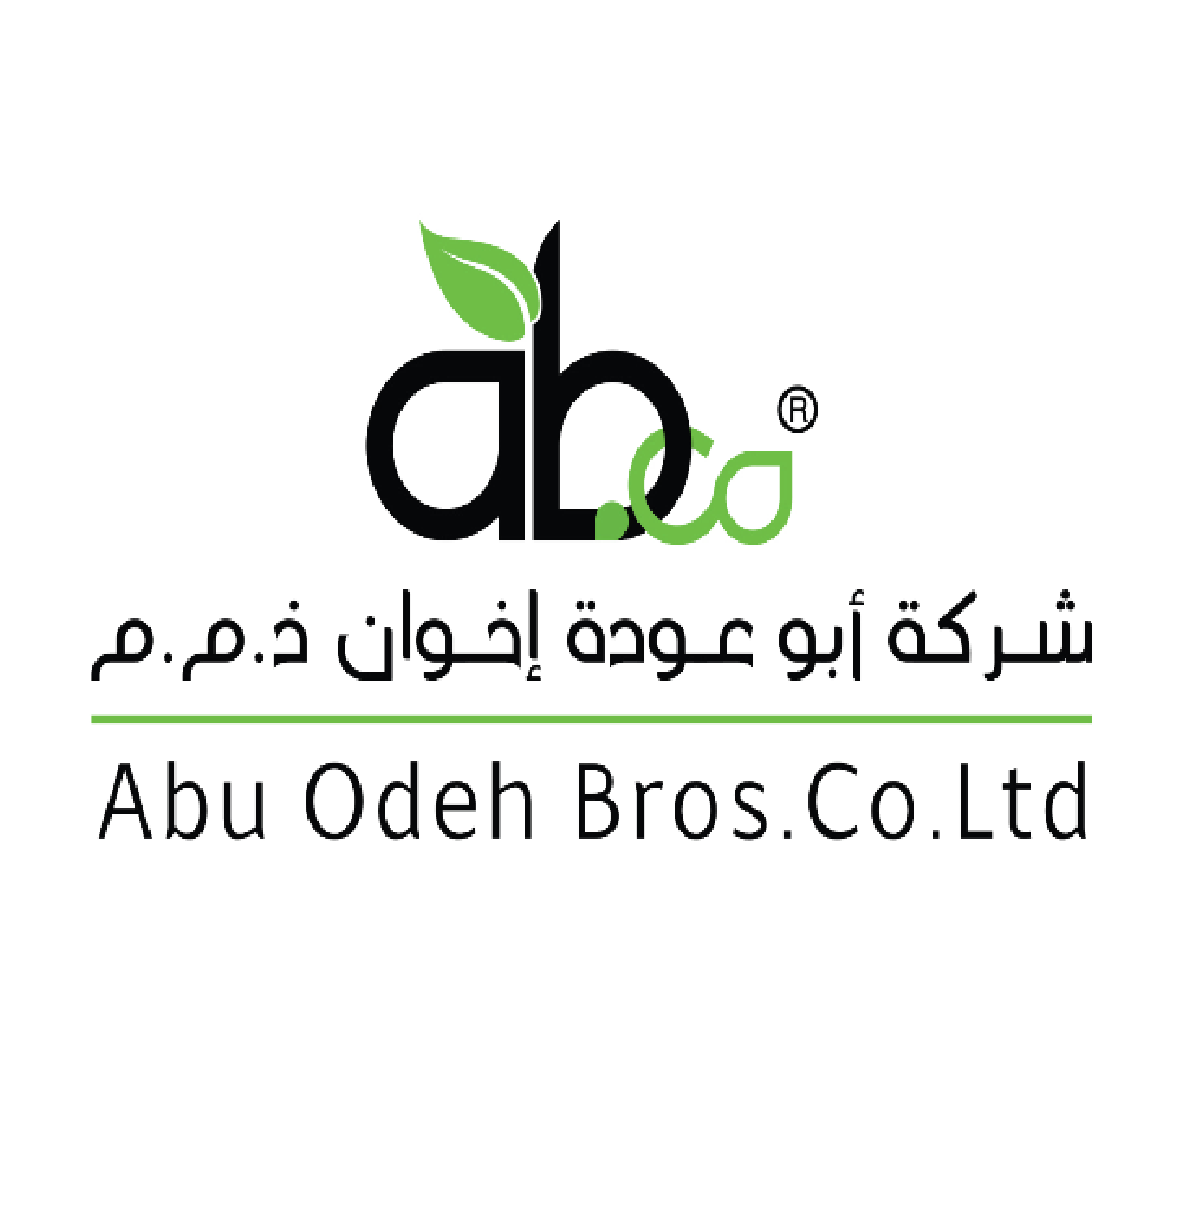 Abu Odeh Bros